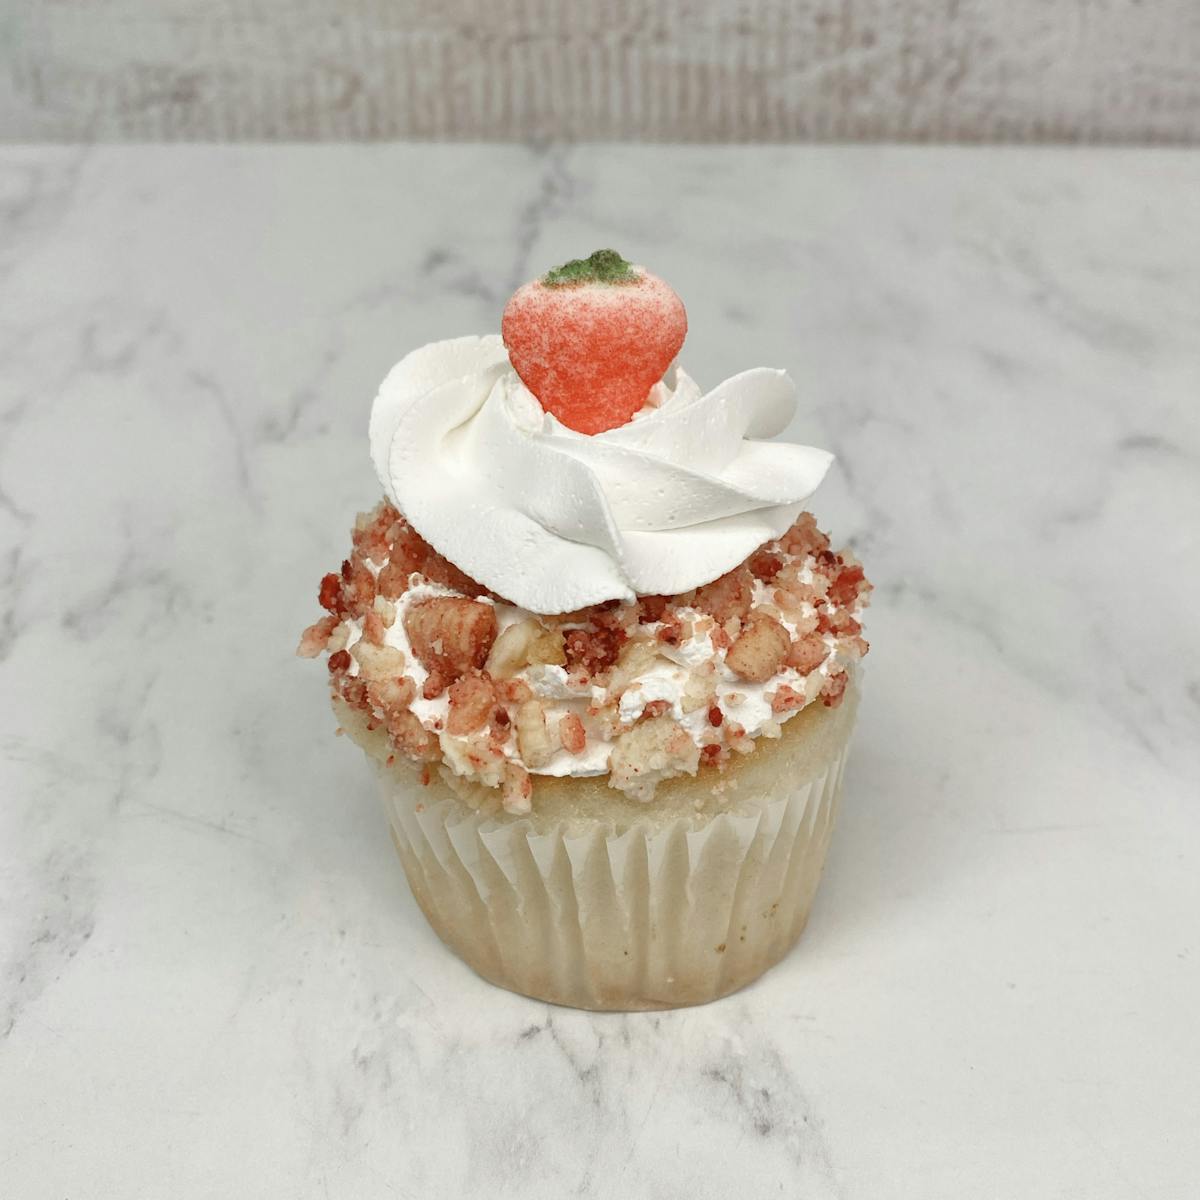 a strawberry cupcake